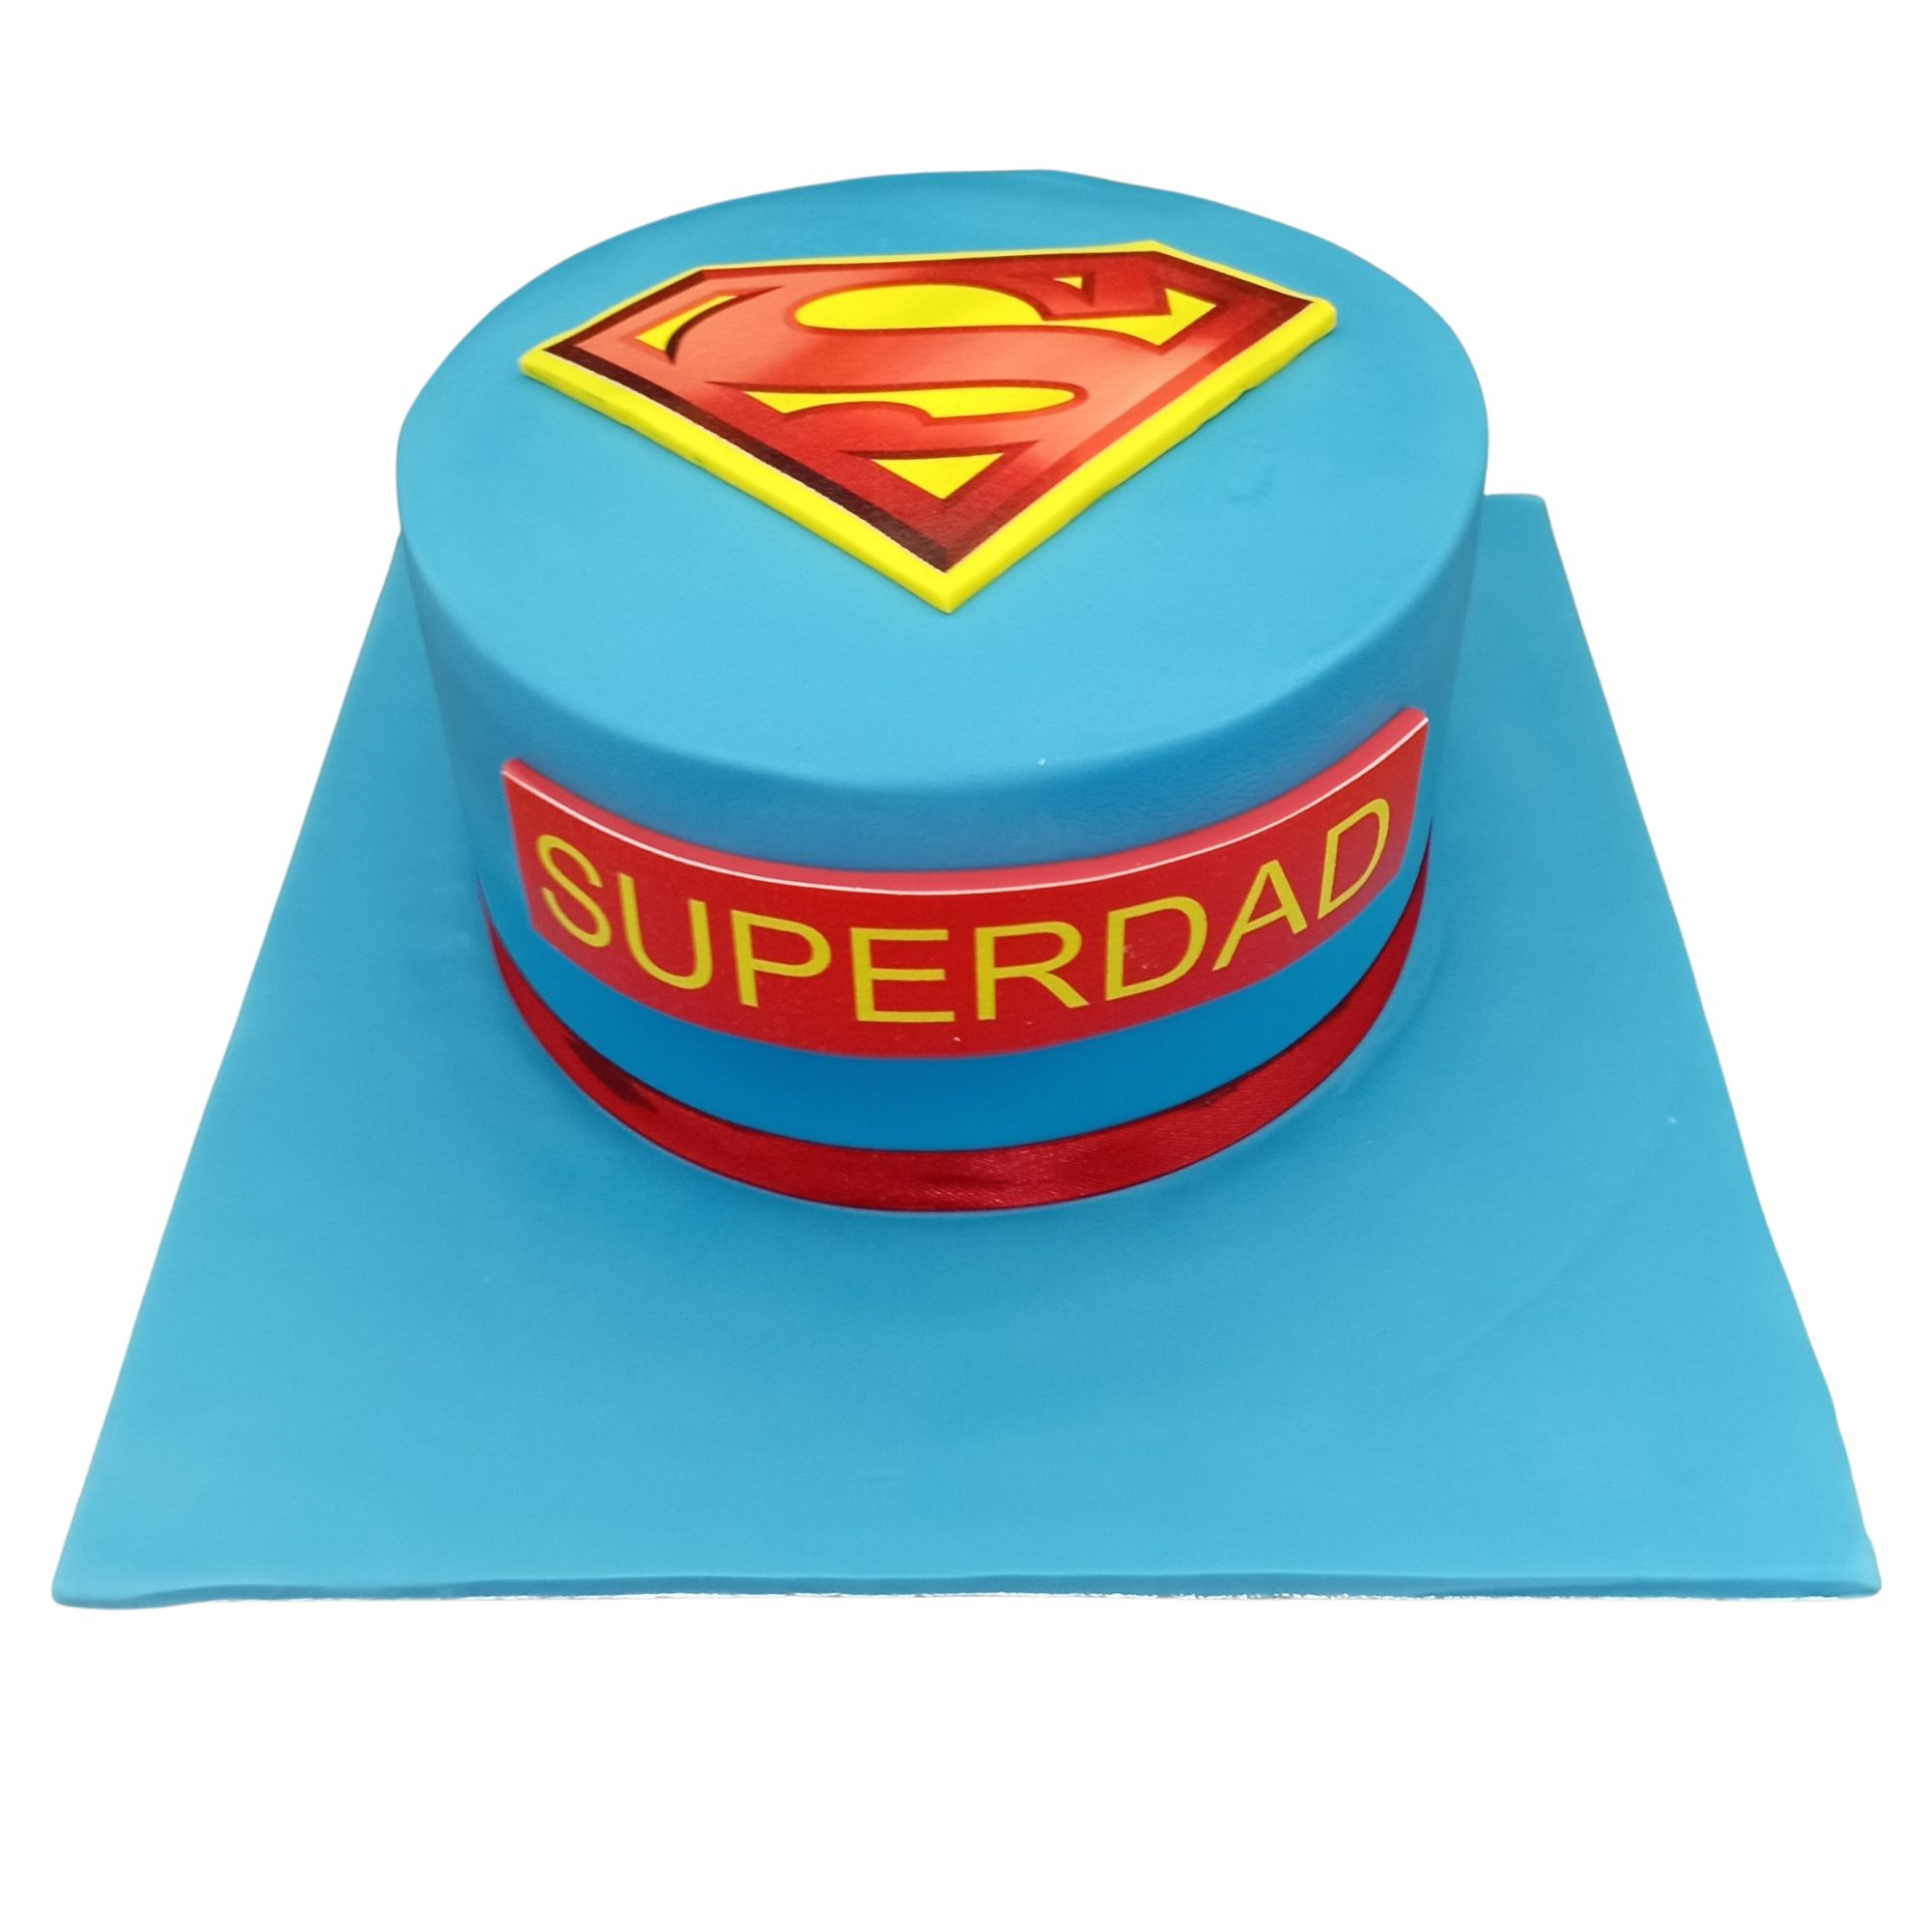 Superdad Cake